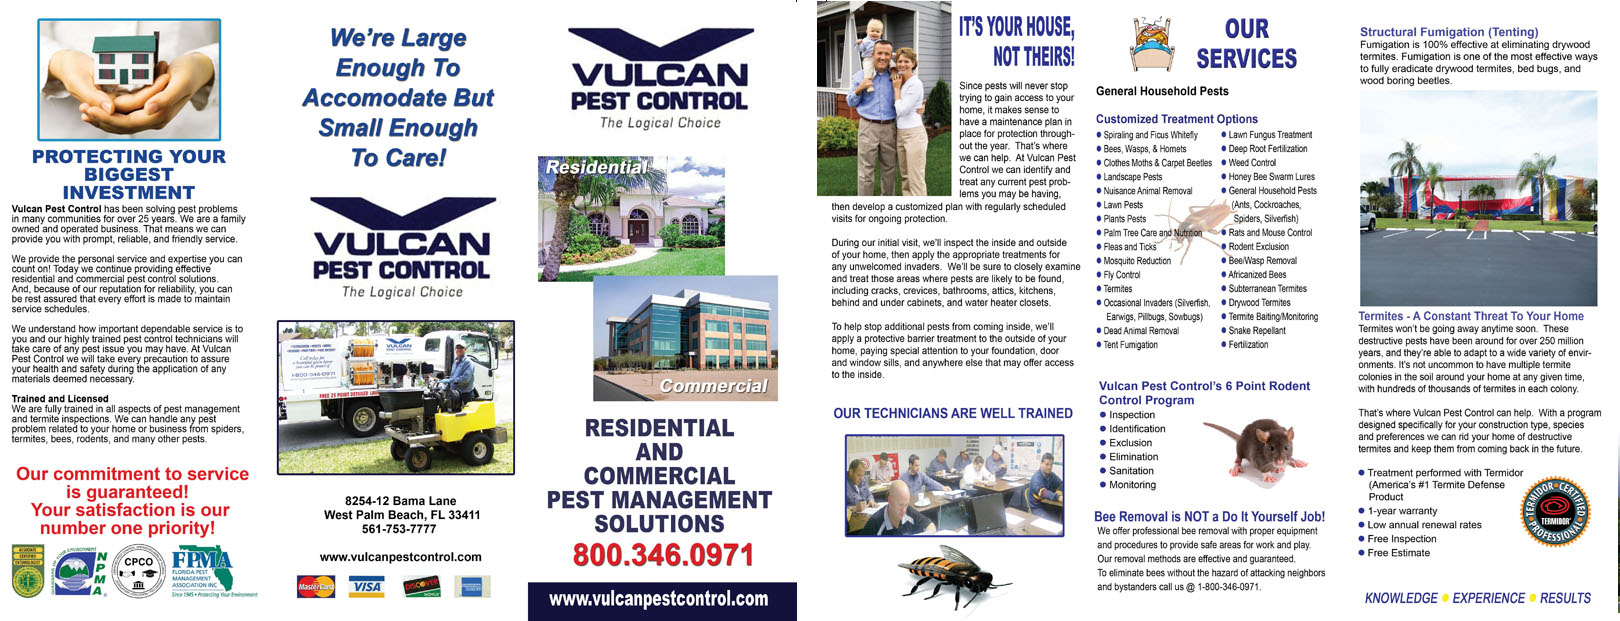 Vulcan Pest Control Brochure Design